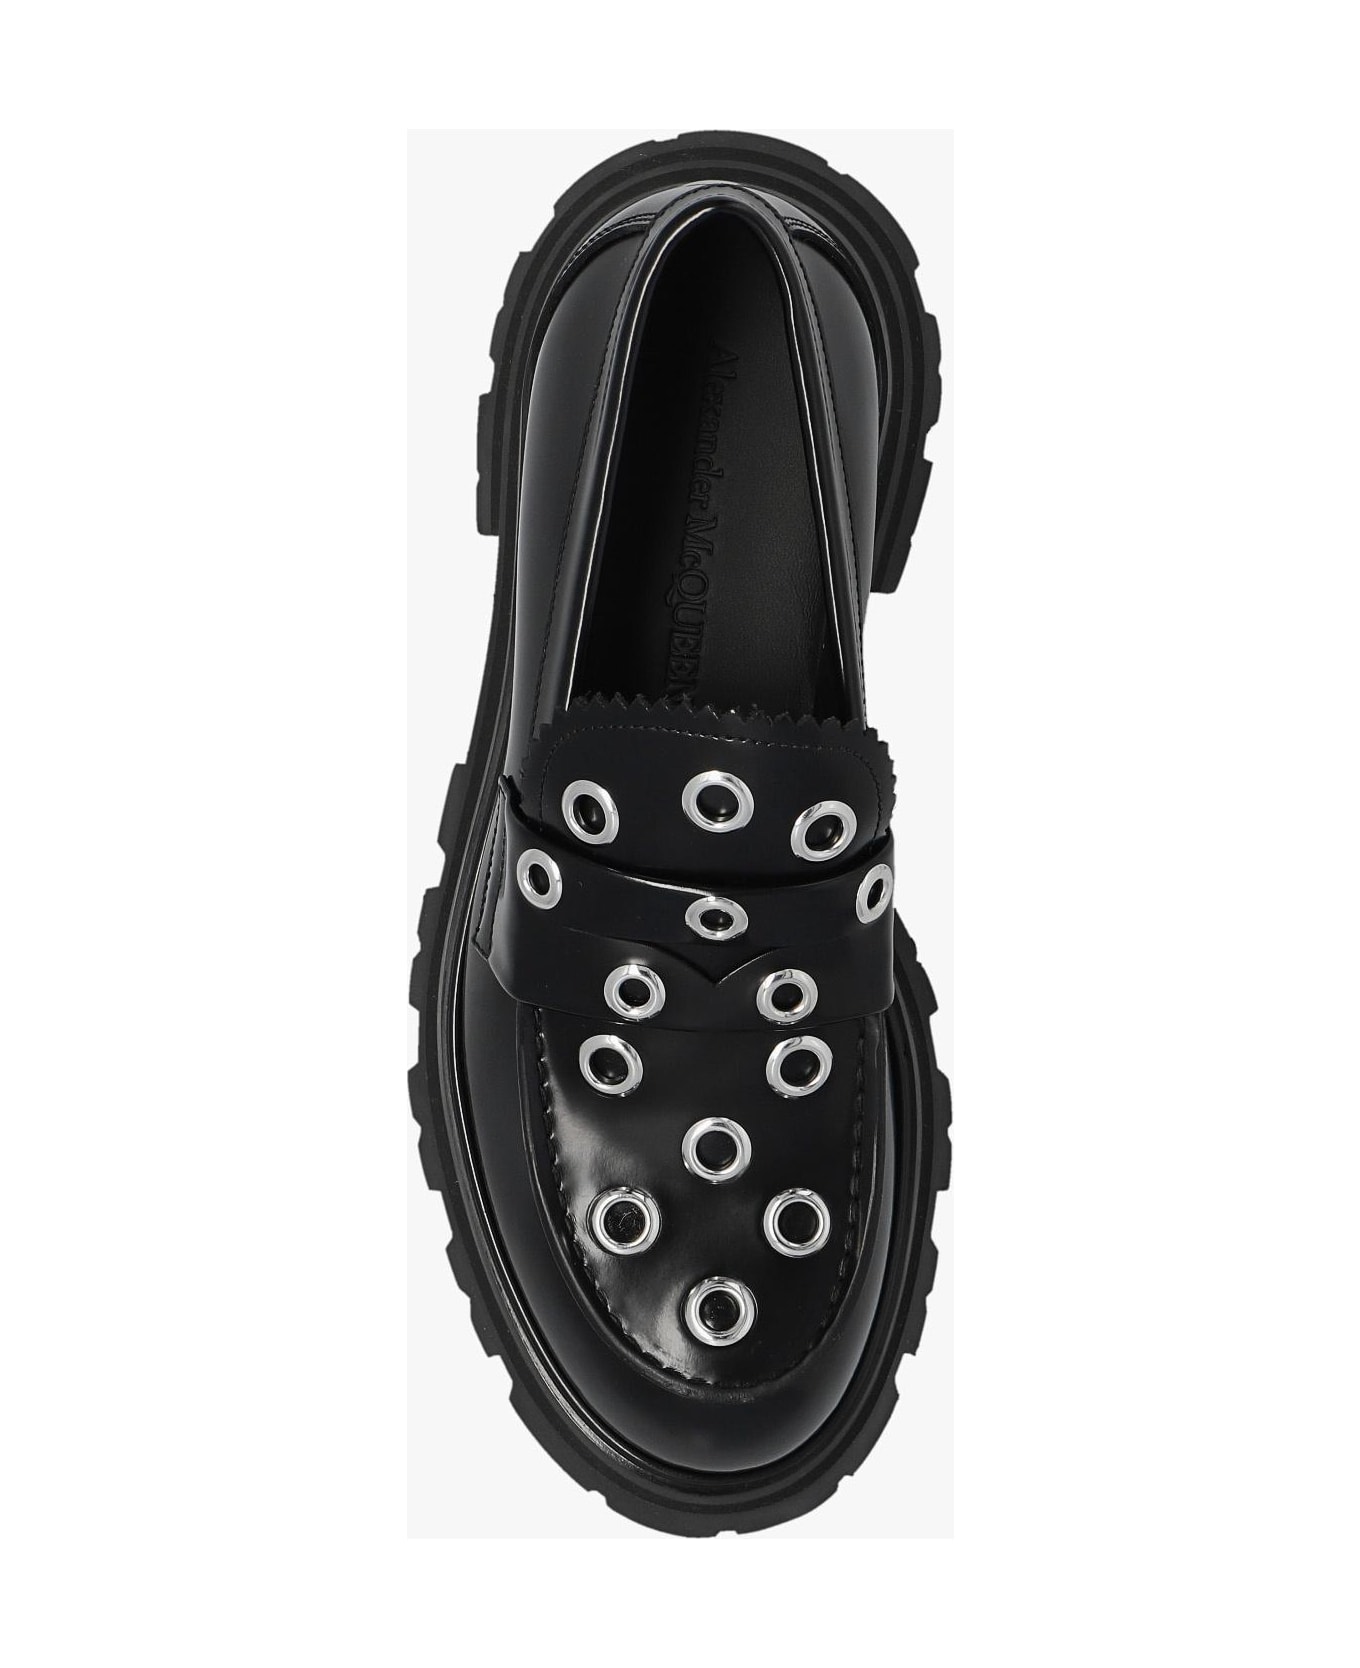 Alexander McQueen Studded Leather Shoes - Black フラットシューズ